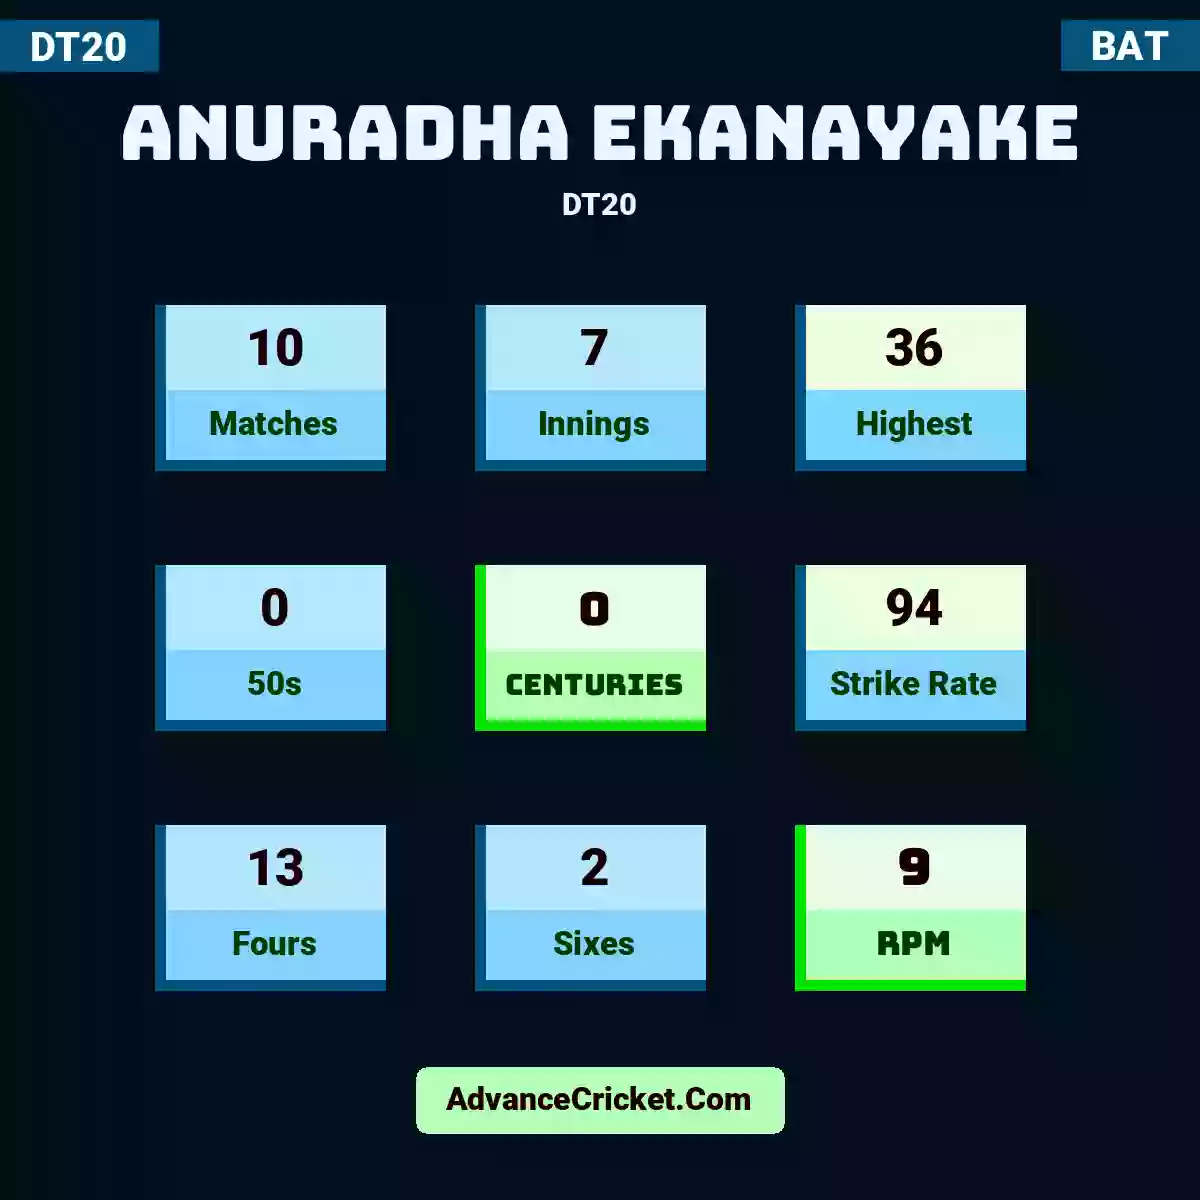 Anuradha Ekanayake DT20 , Anuradha Ekanayake played 10 matches, scored 36 runs as highest, 0 half-centuries, and 0 centuries, with a strike rate of 94. A.Ekanayake hit 13 fours and 2 sixes, with an RPM of 9.